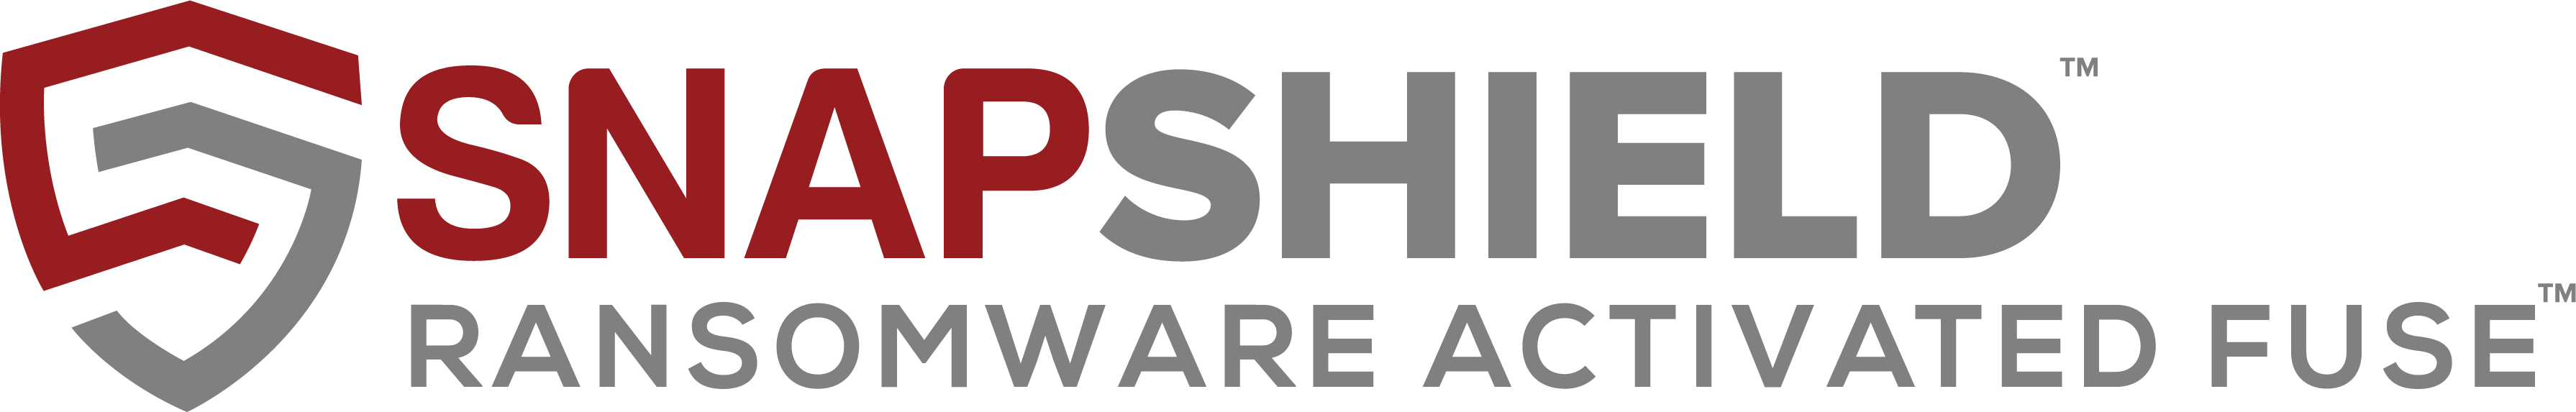 SnapShield logo